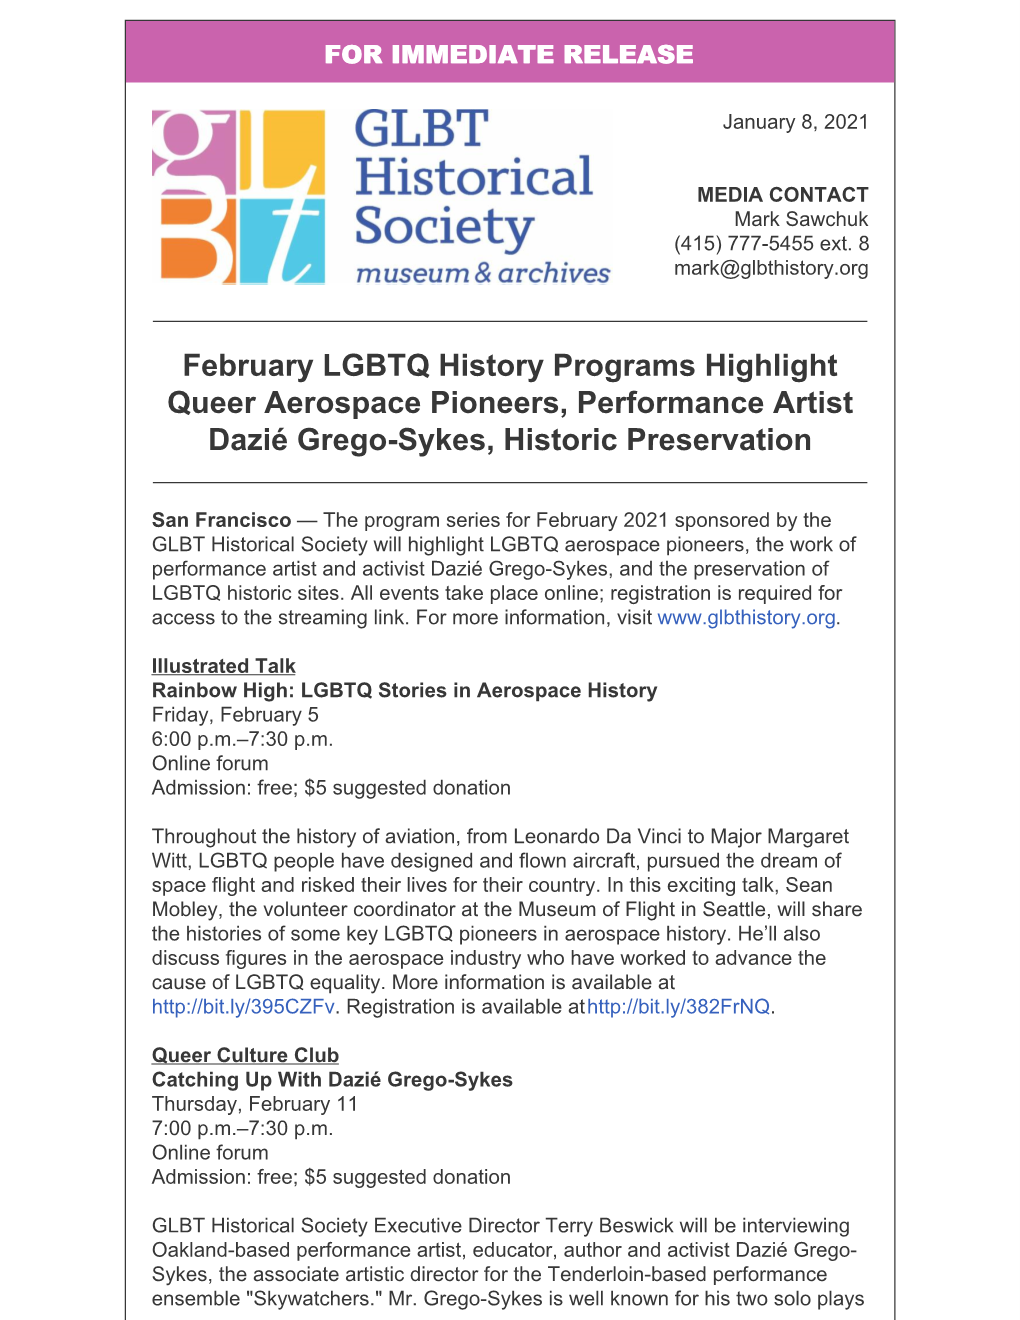 February LGBTQ History Programs Highlight Queer Aerospace Pioneers, Performance Artist Dazié Grego-Sykes, Historic Preservation